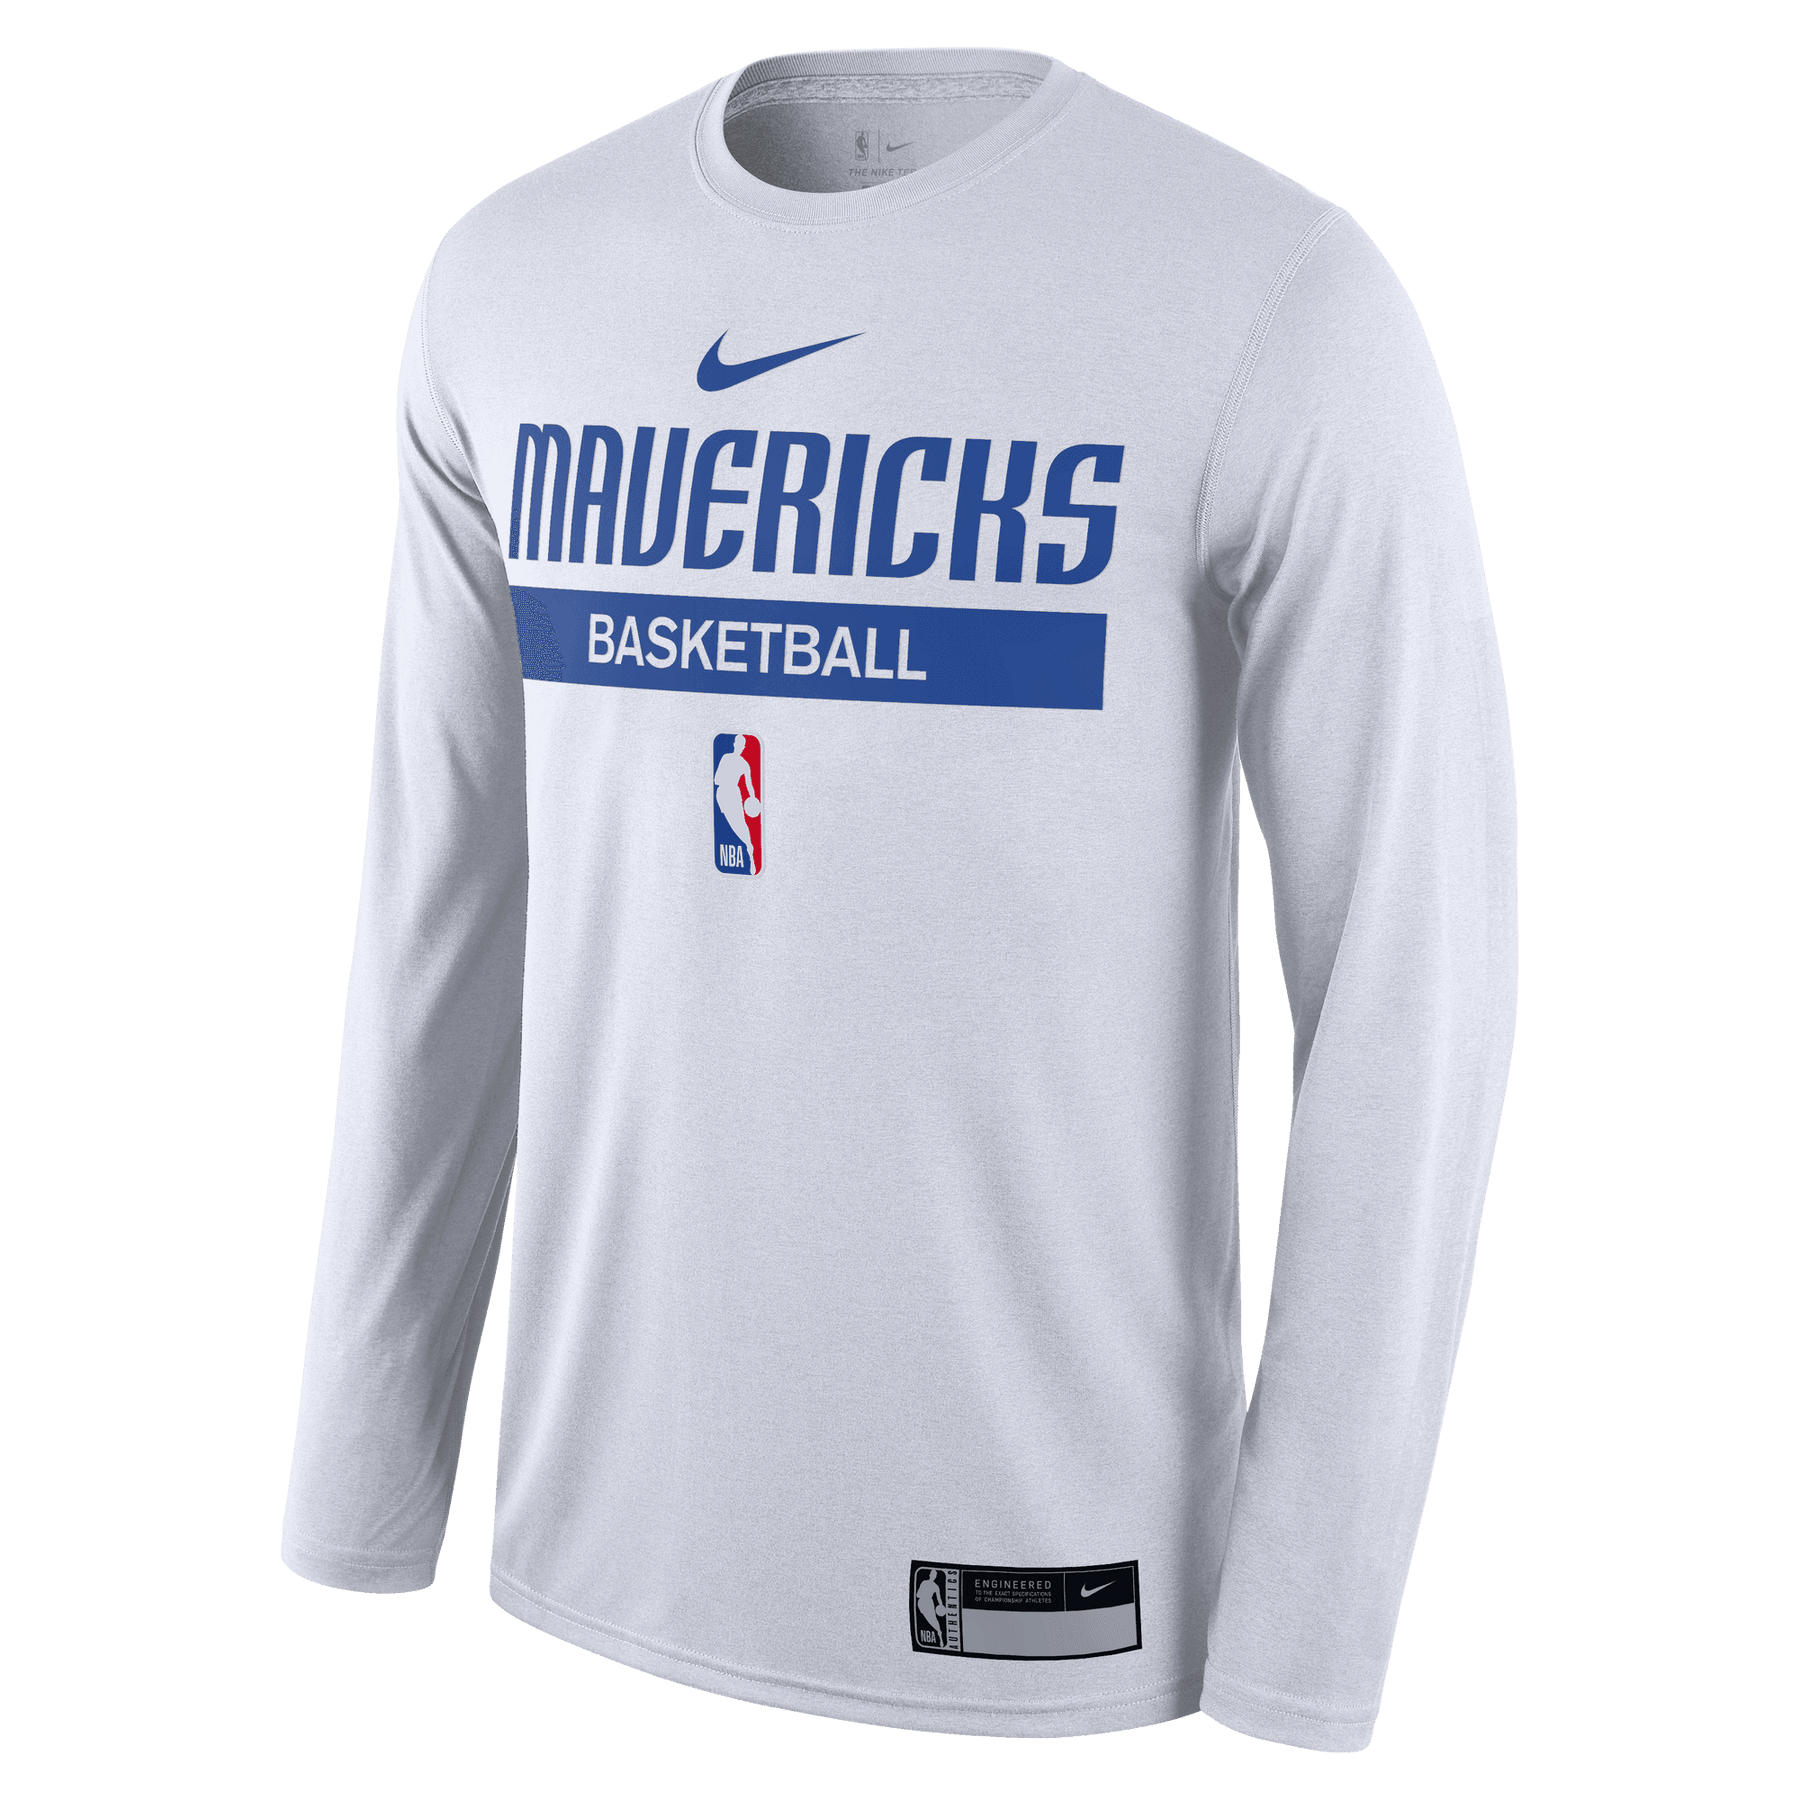 Custom Long-sleeve Basketball Practice Shirt With Name & 